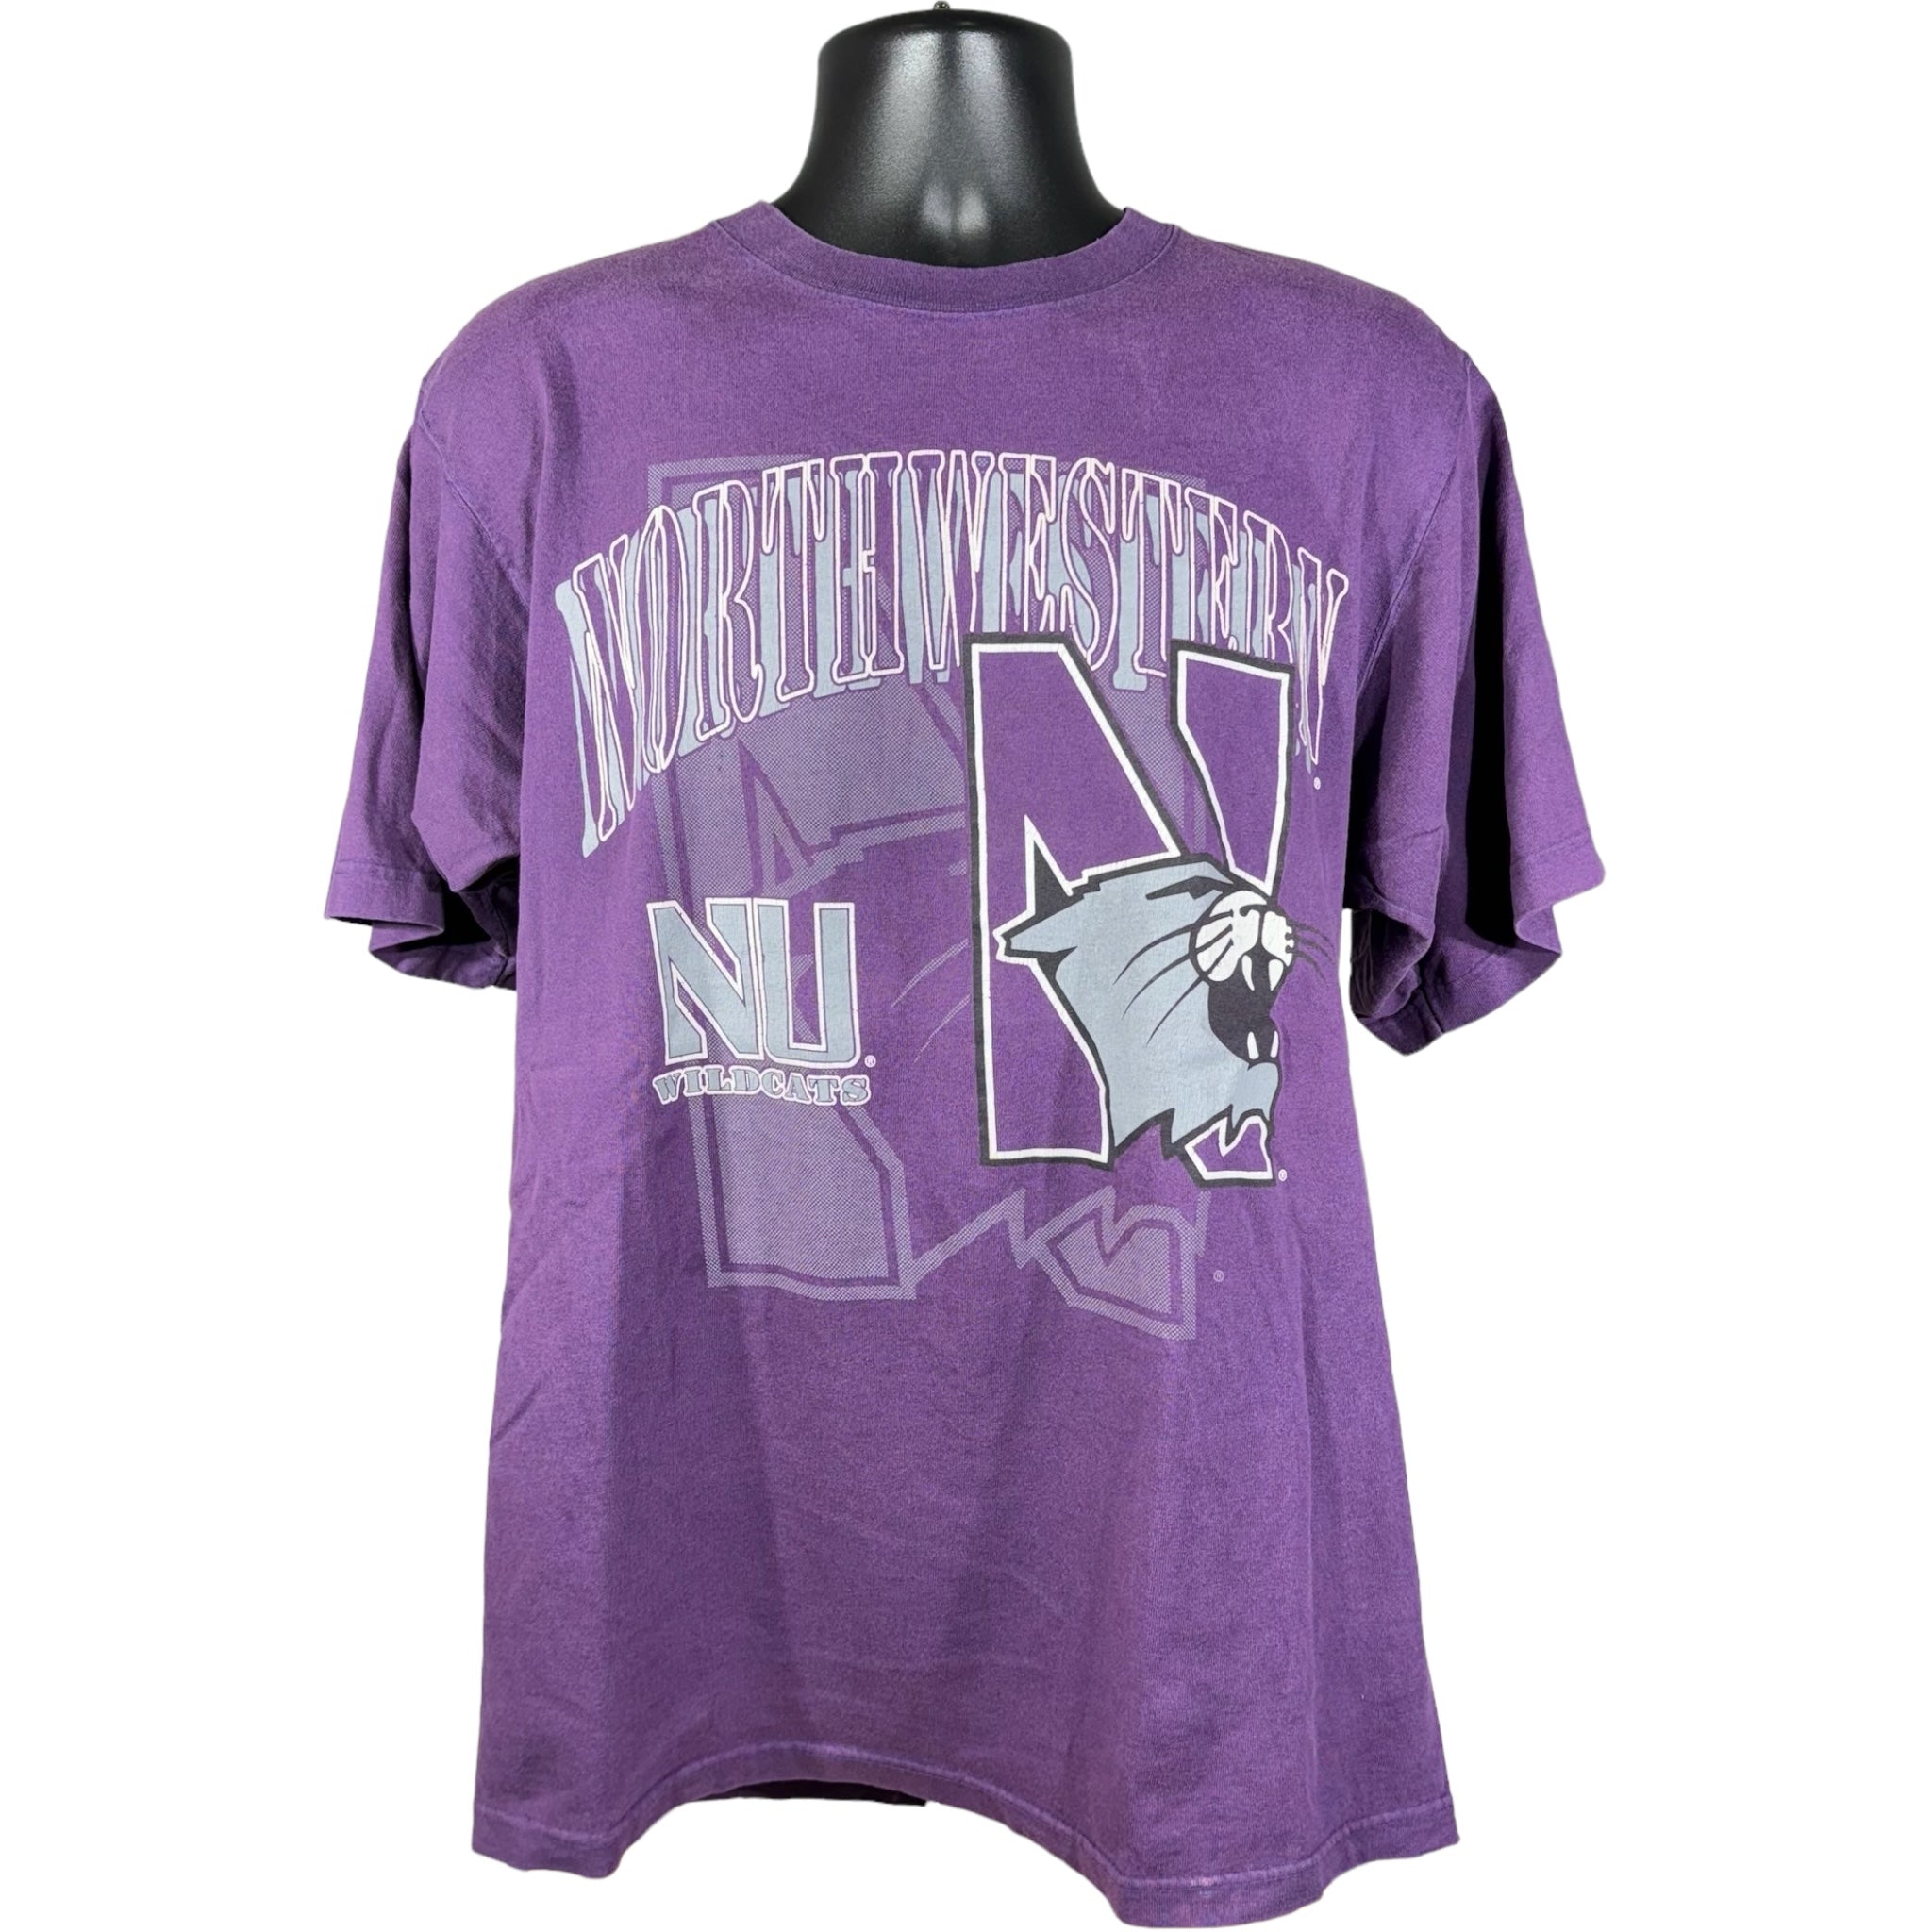 Vintage Northwestern University Wildcats Tee